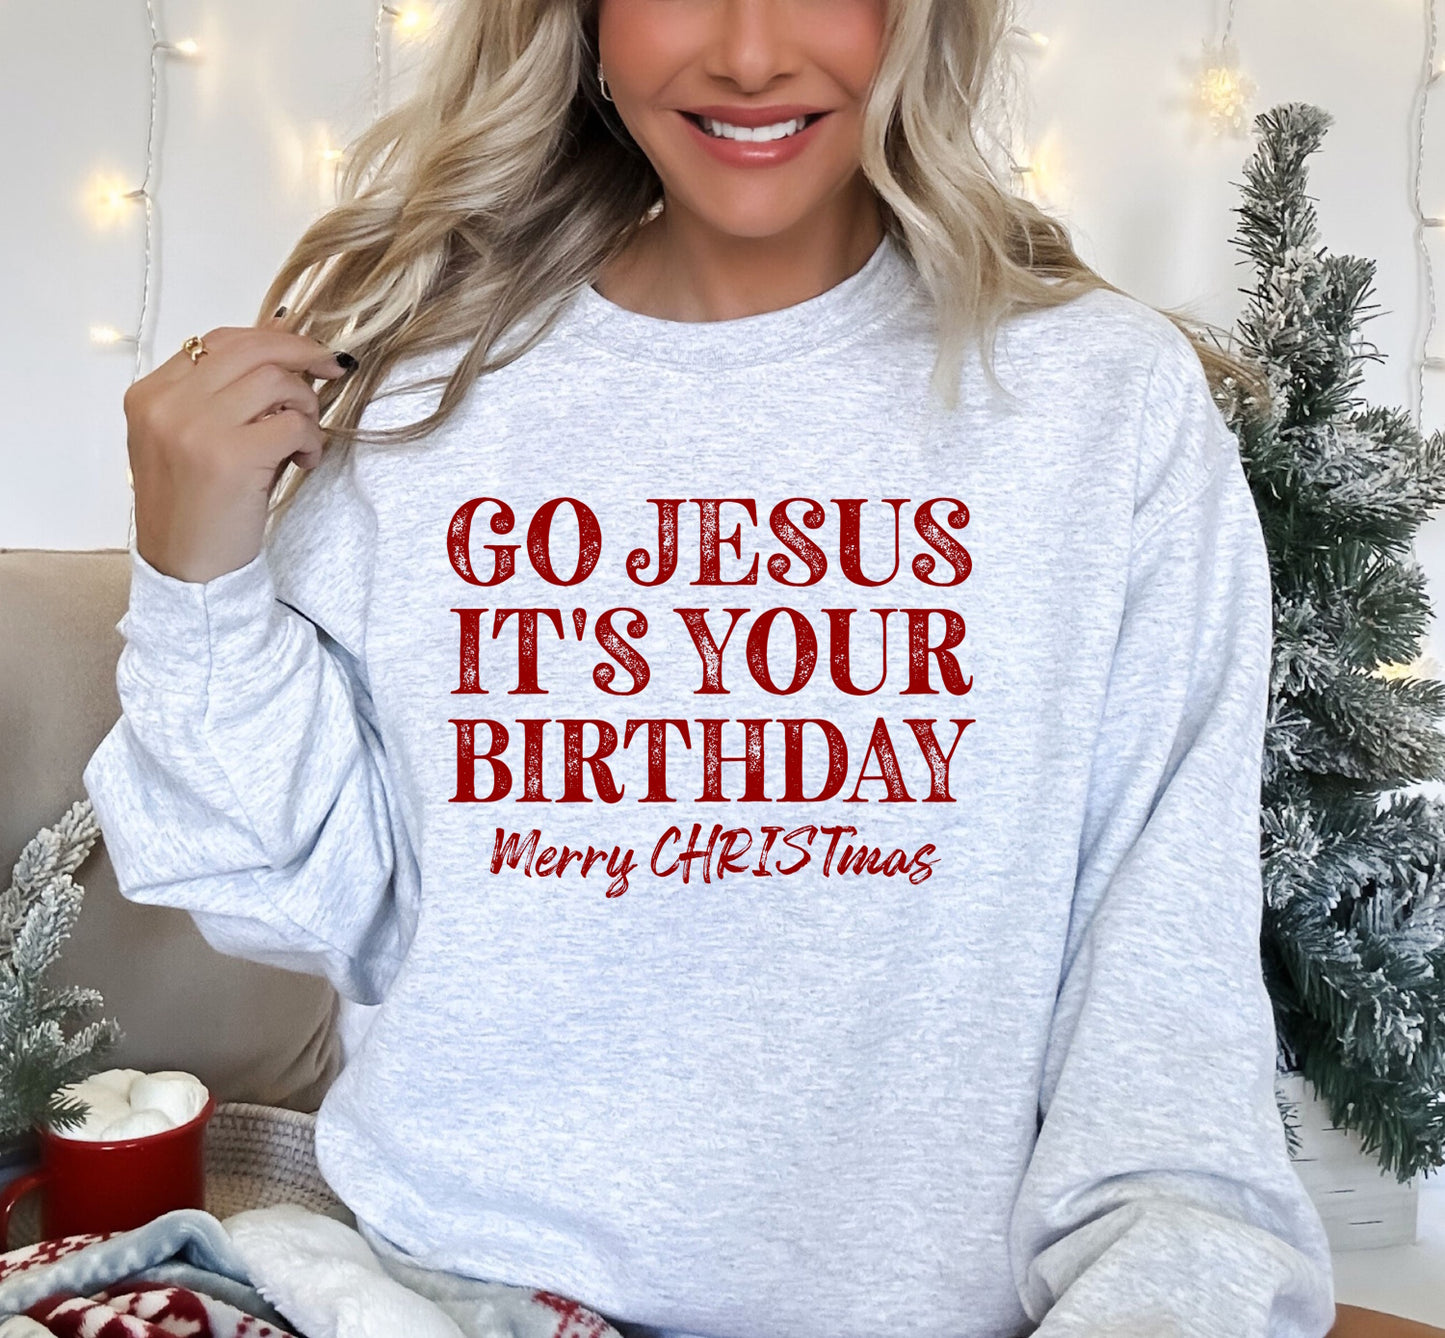 Go Jesus It's Your Birthday Crewneck Christmas Sweatshirt